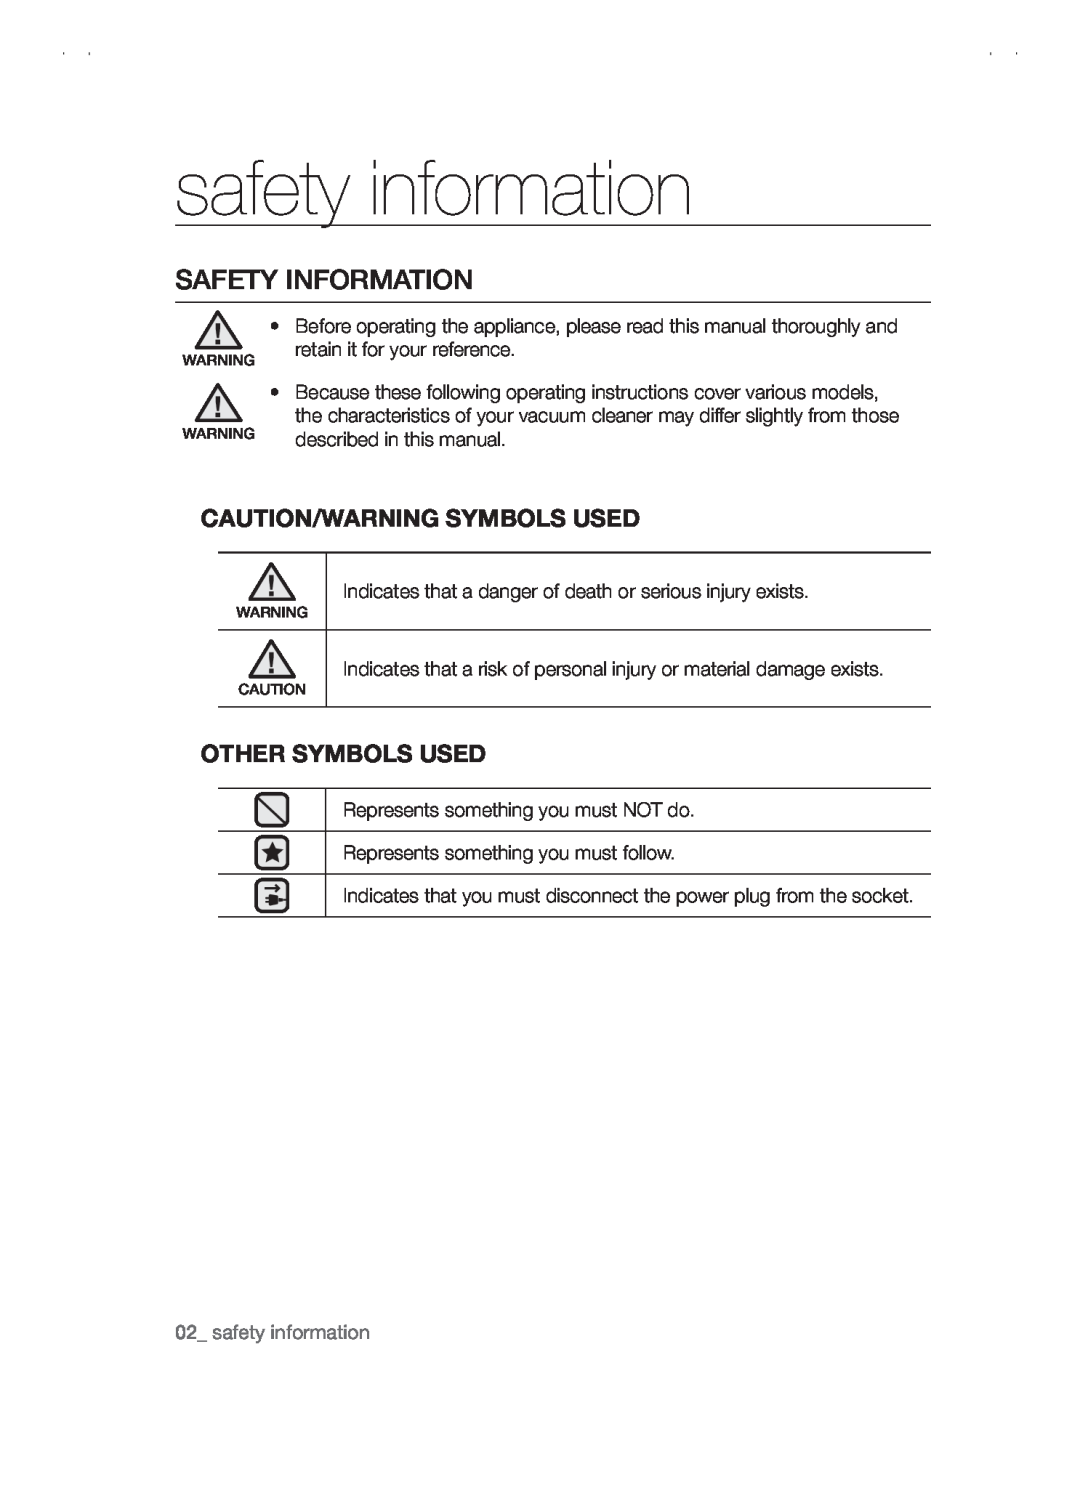 Samsung VCC5480V3B/XET manual safety information, Safety information, Caution/Warning Symbols Used, Other Symbols Used 